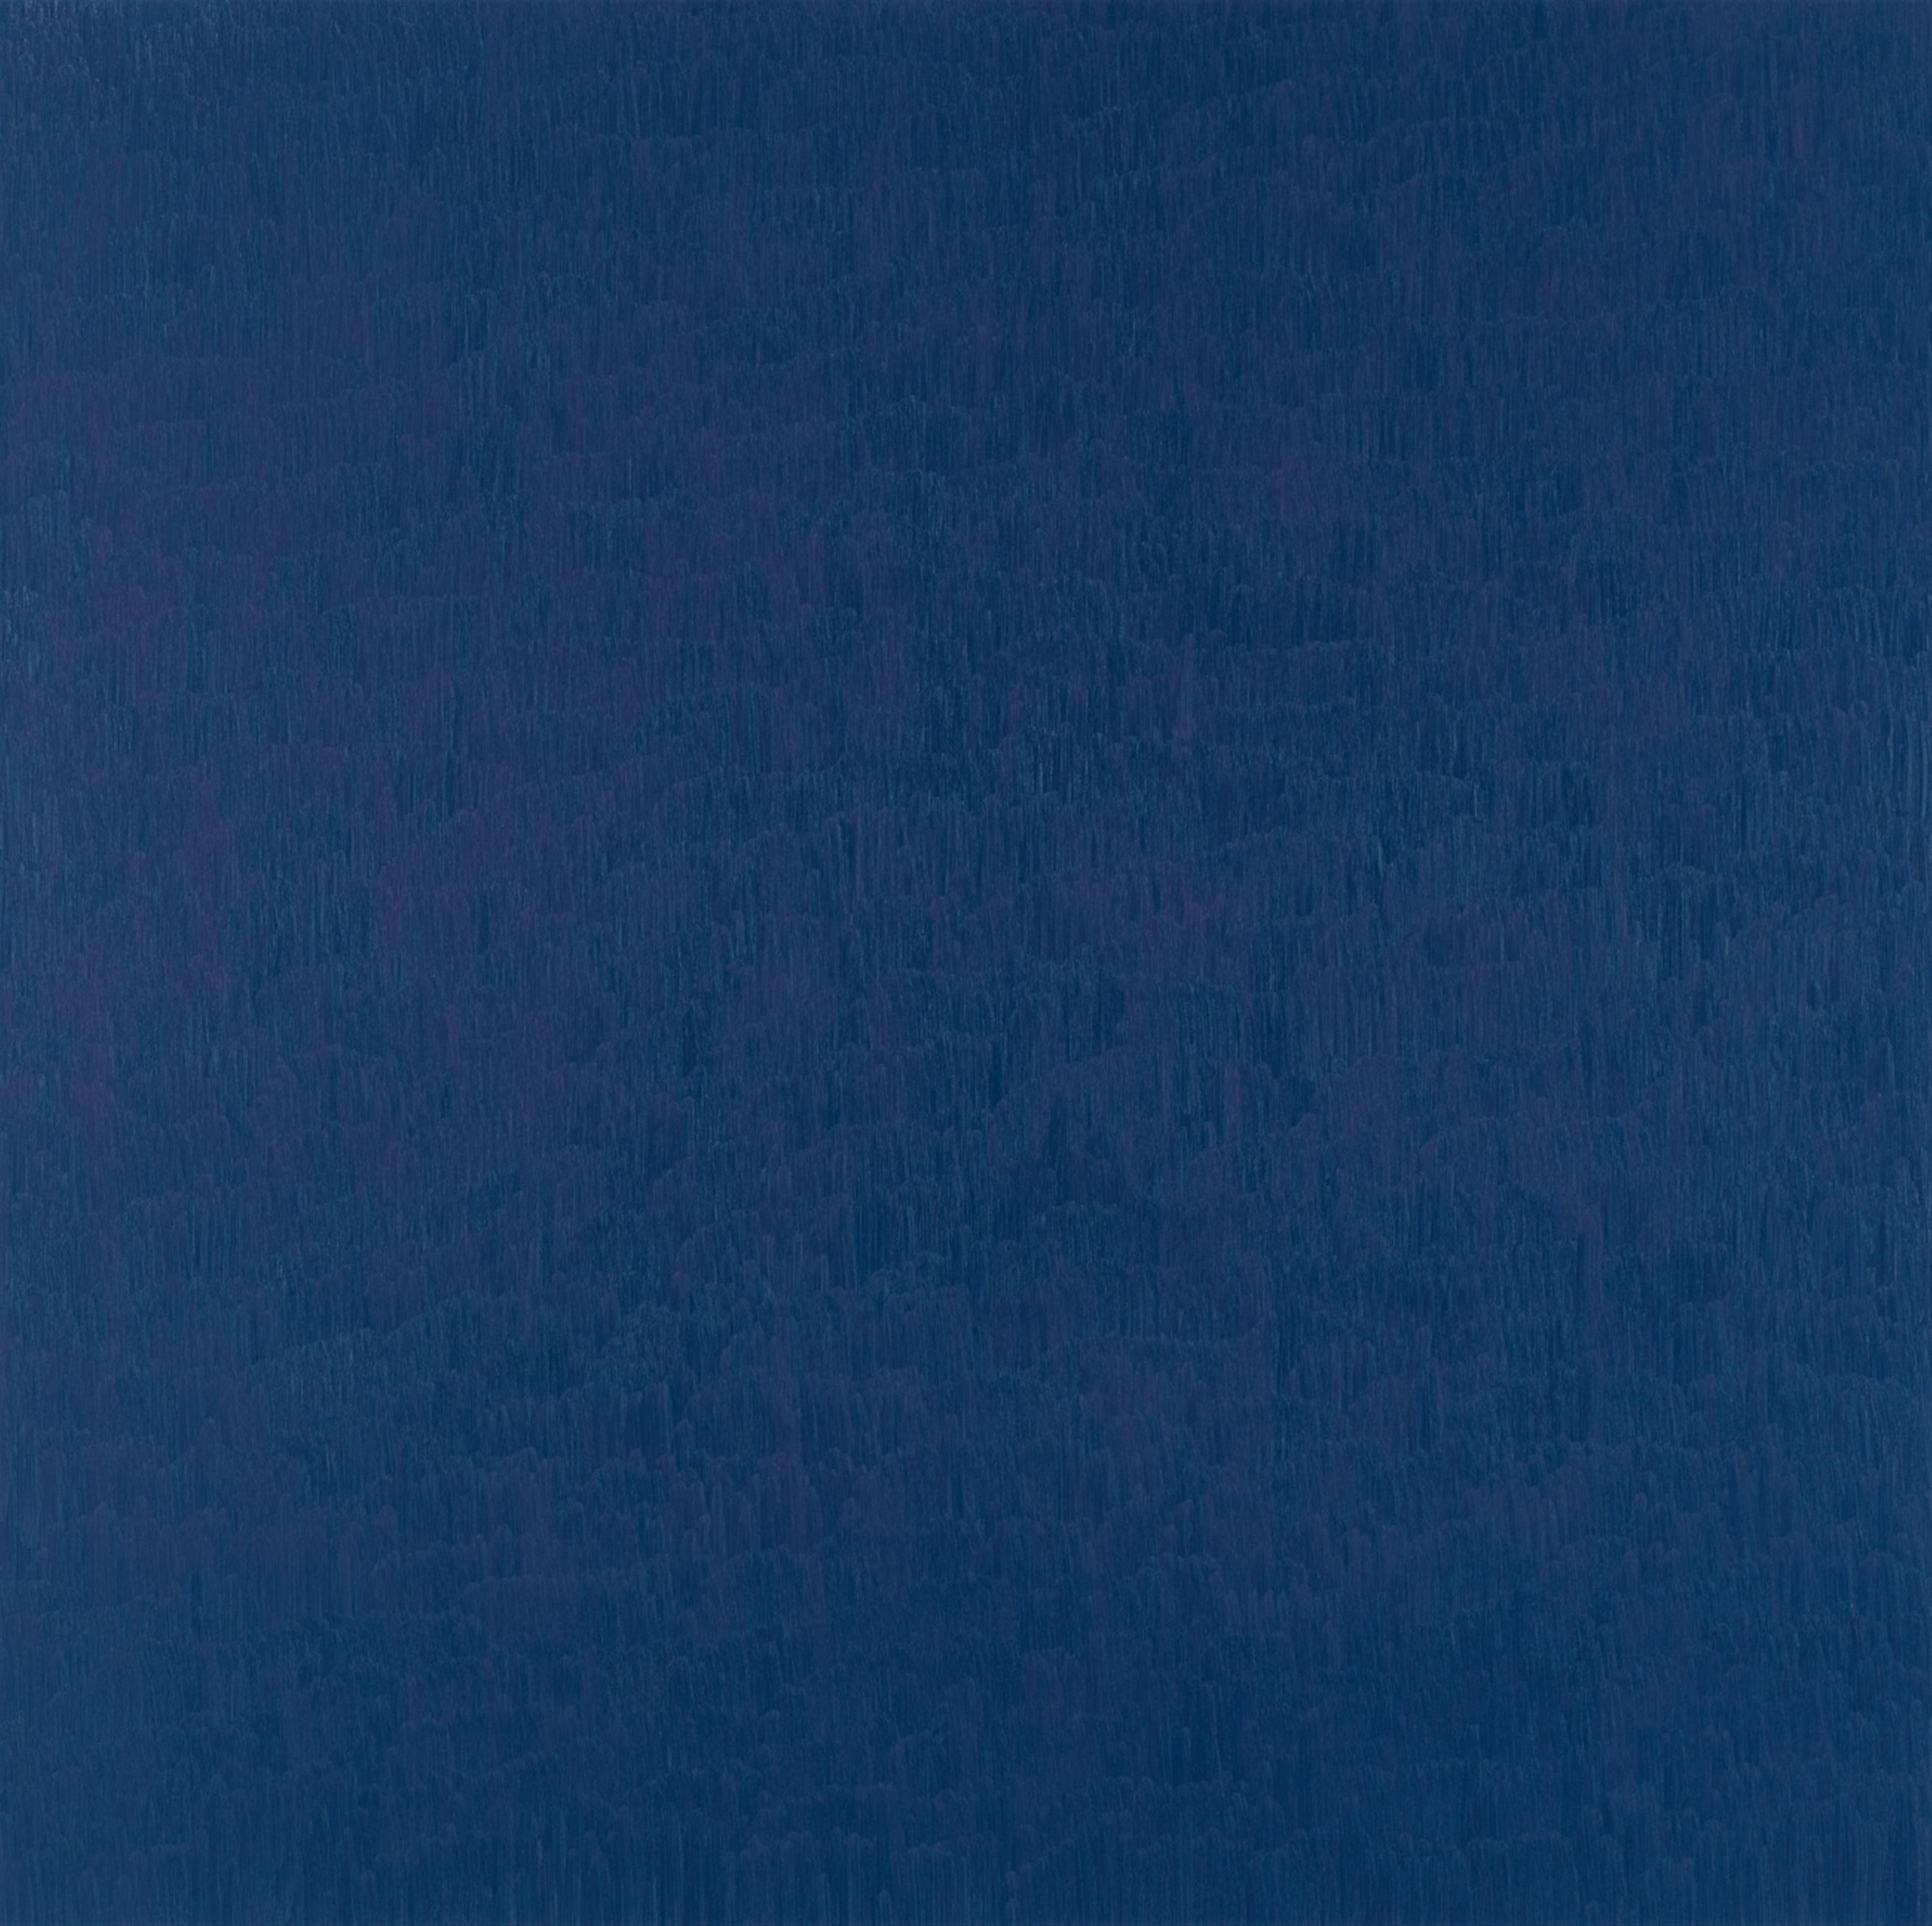 Marcia Hafif - Heliogen Blue - image-1